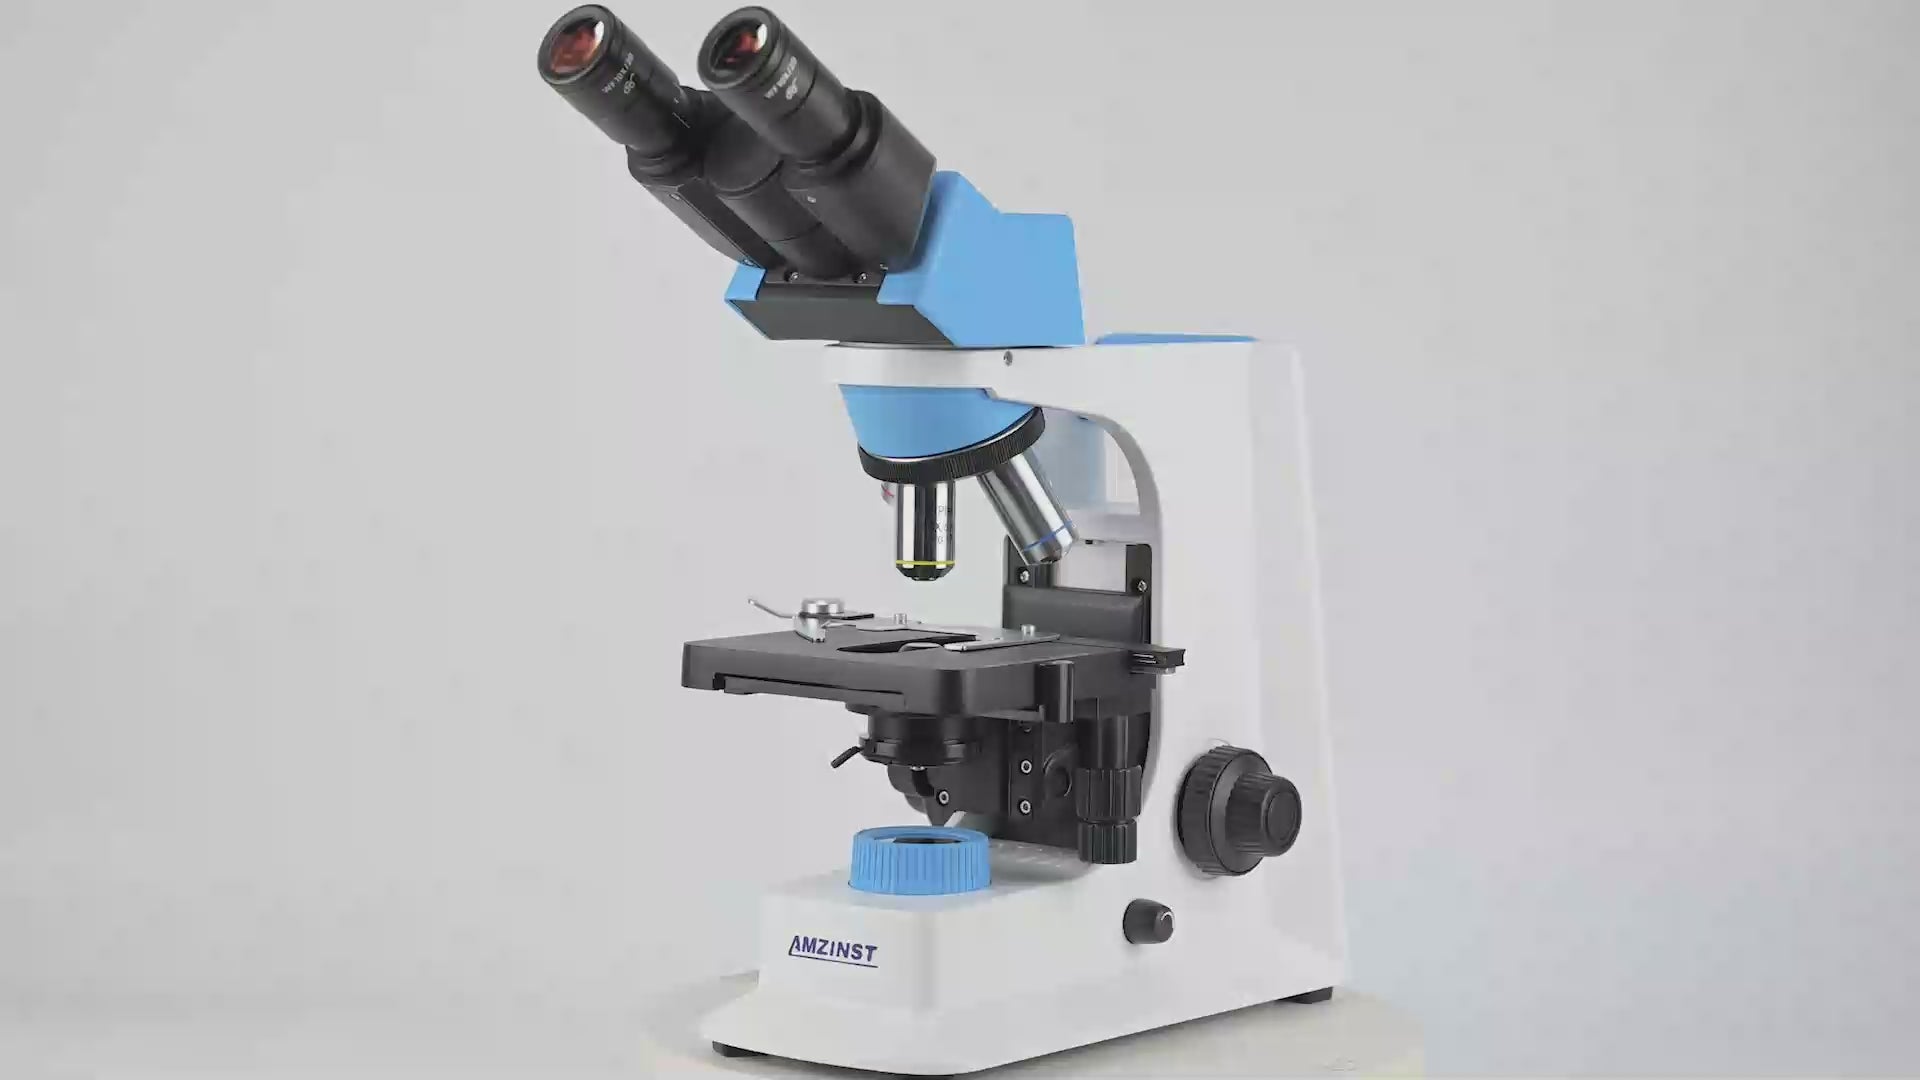 NK-230FA/NK-230FP FINIDAD Microscopio binocular vertical